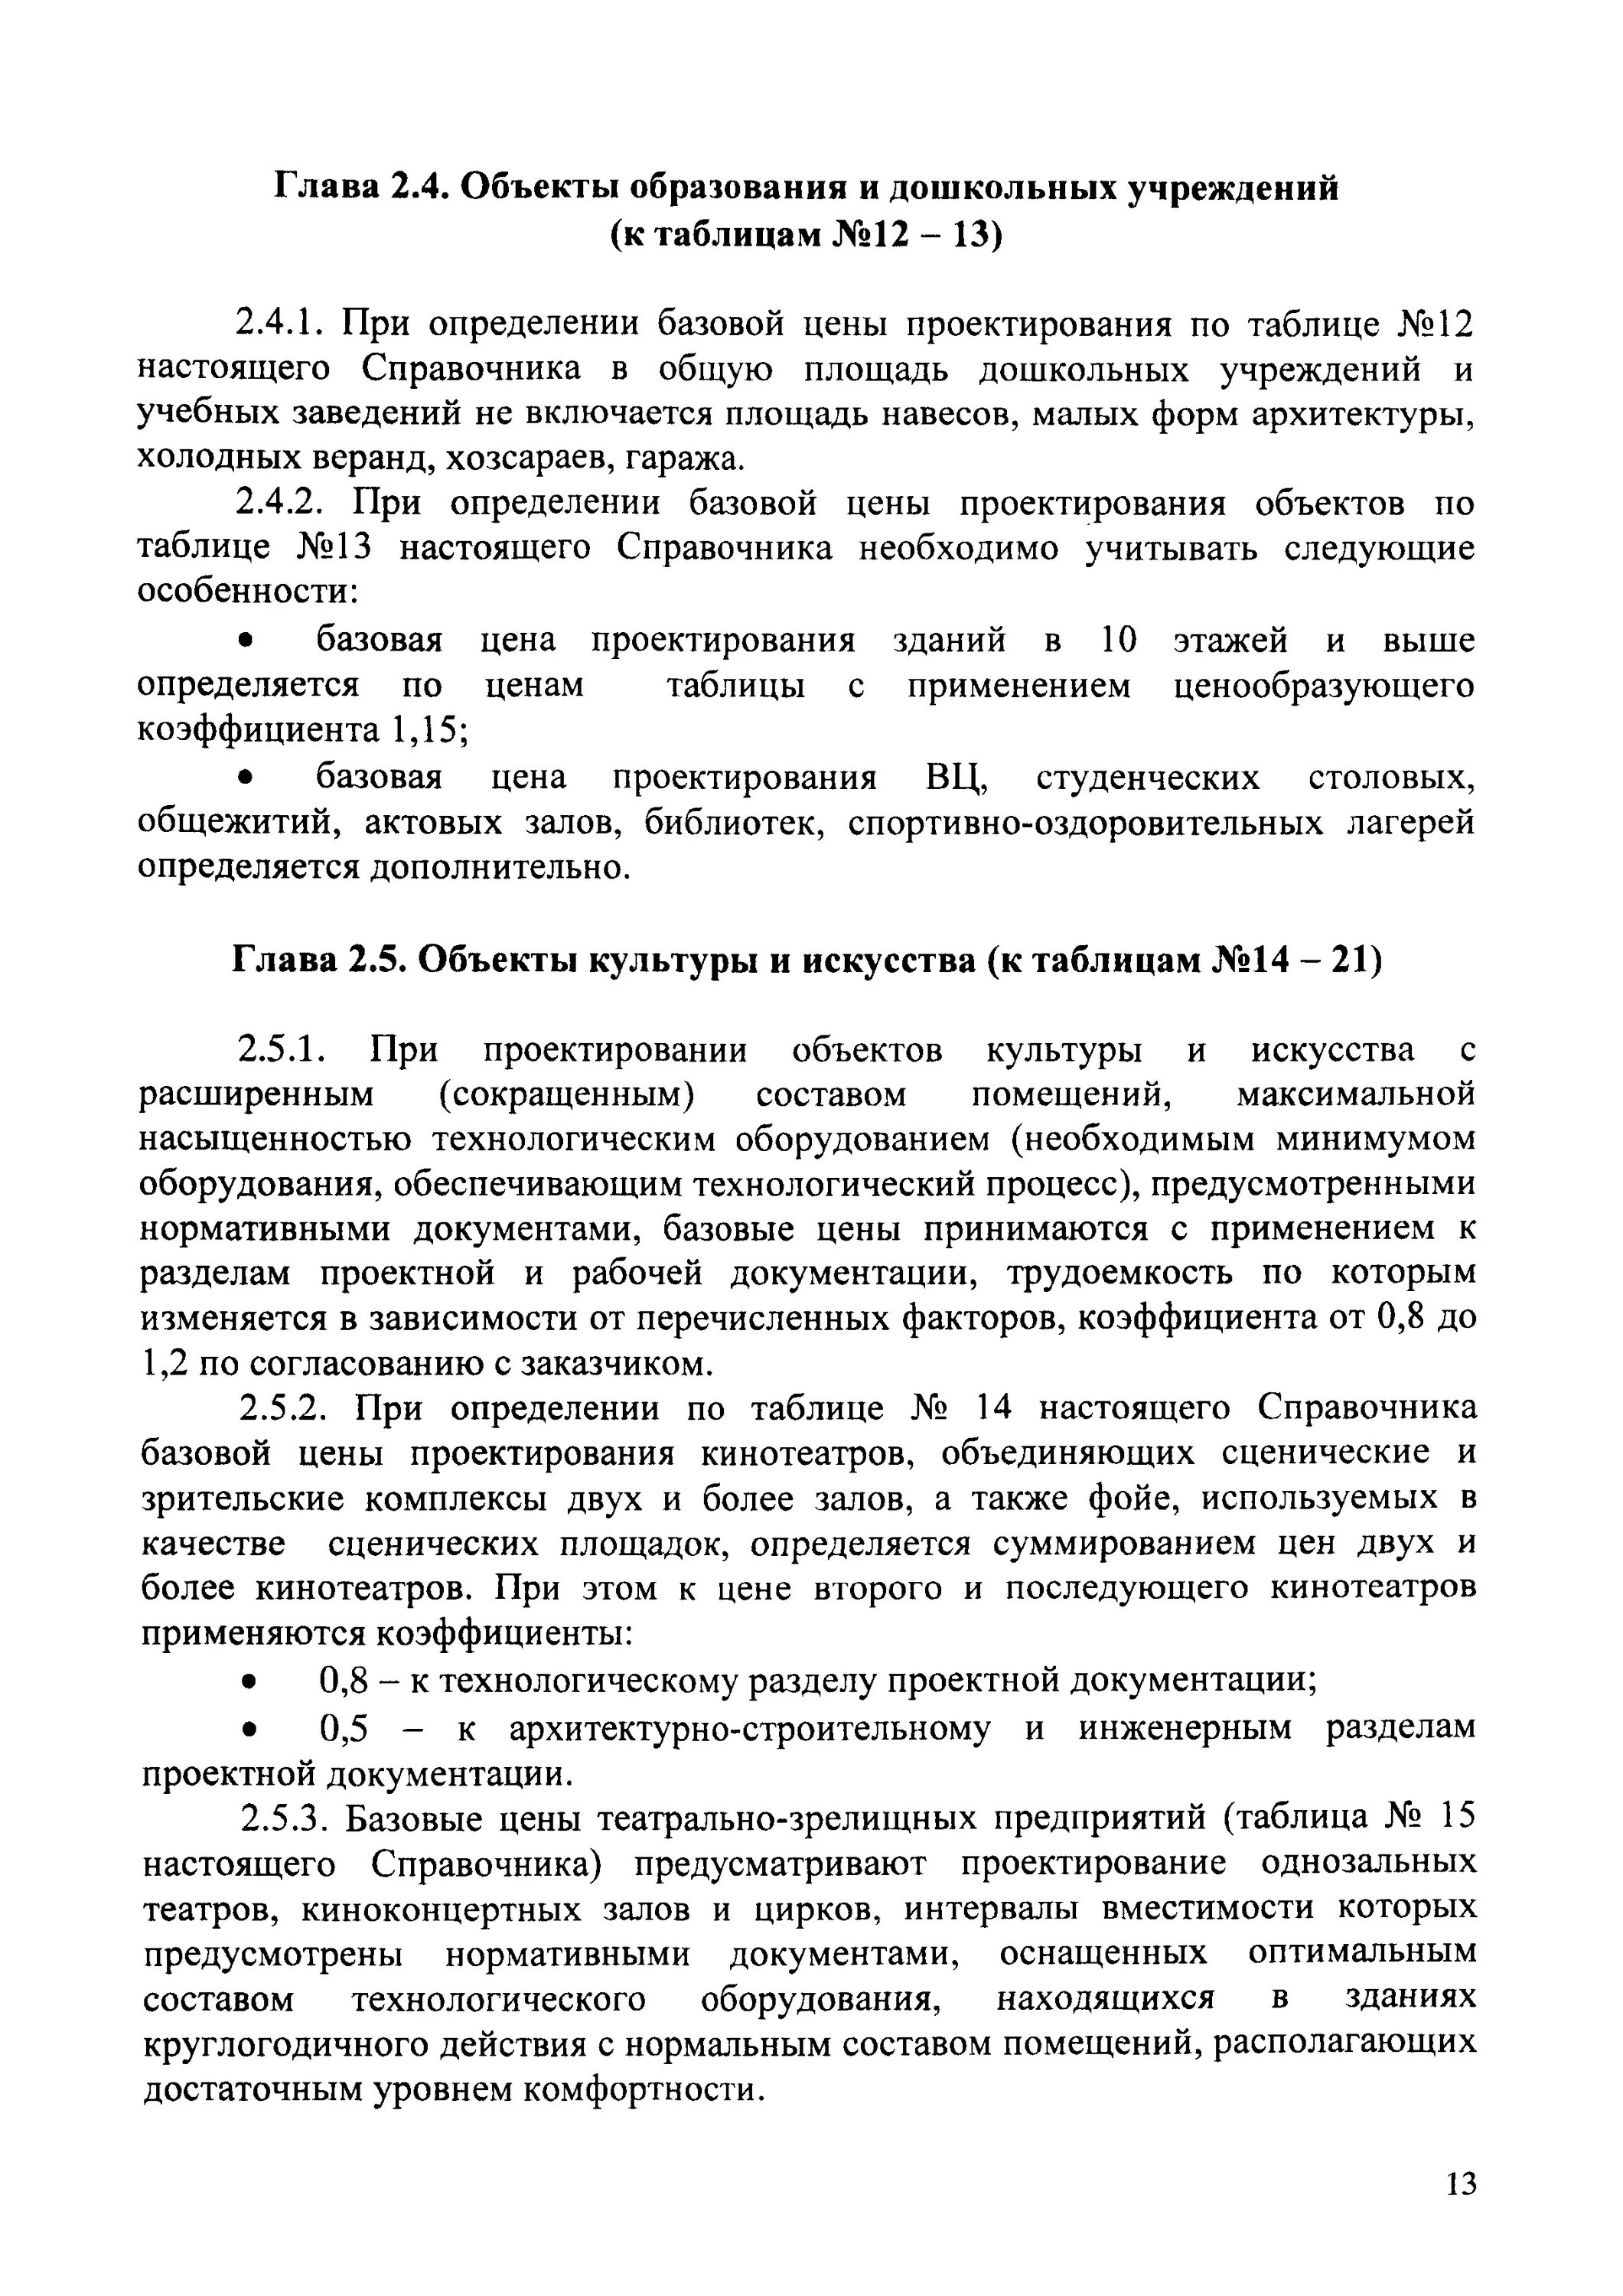 Справочник базовых цен 81 2001 03. СБЦП 13-7-3.1.